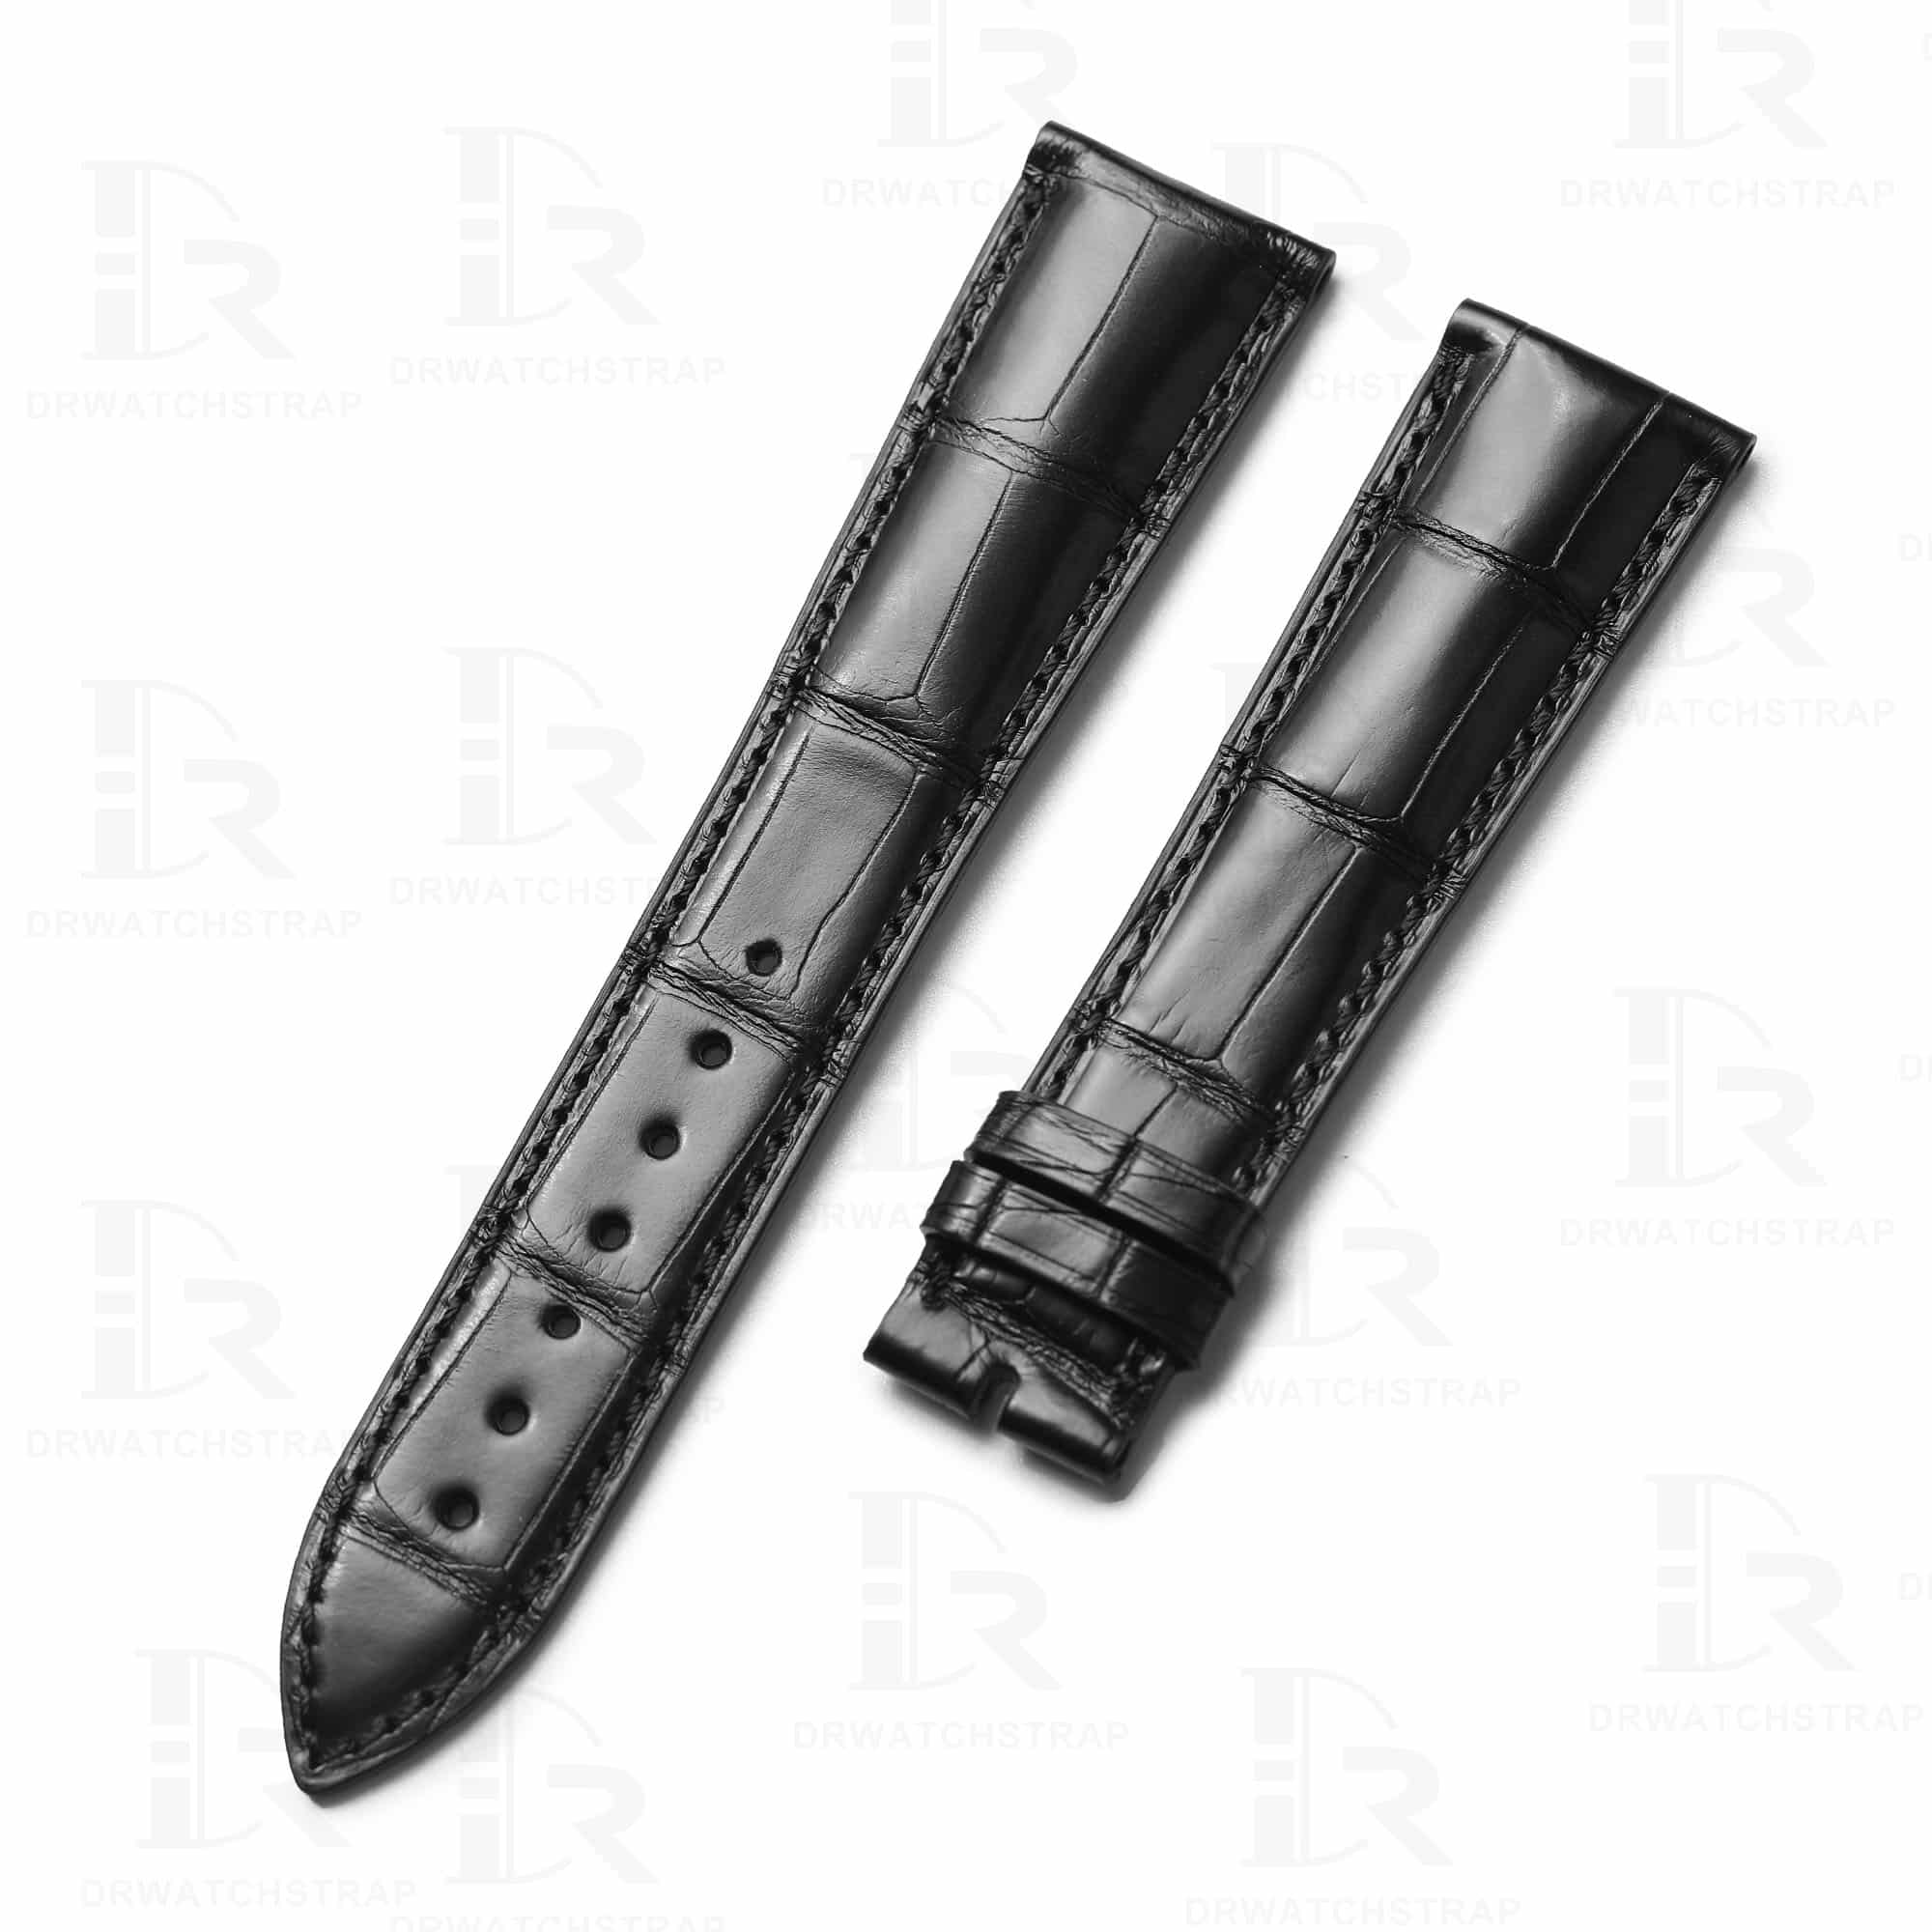 Custom handmade best quality replacement alligator black leather watchbands for Blancpain Villeret 6654 6838 straps